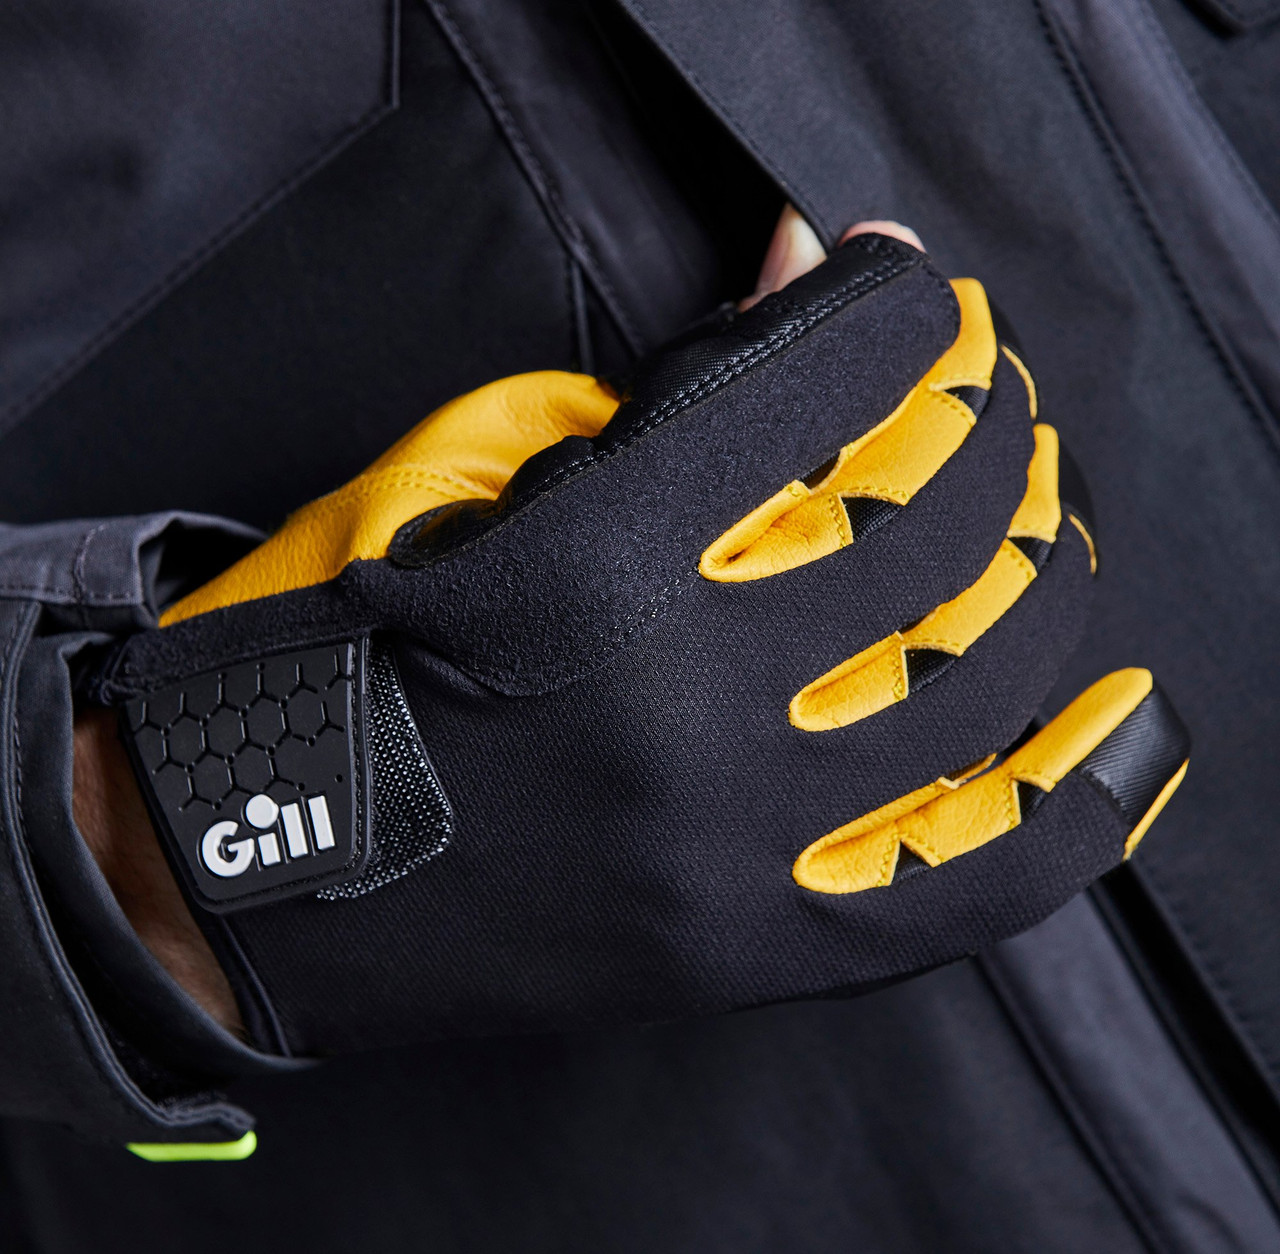 Buy Gill 7443 Pro Glove Short Finger in Canada Binnacle.com